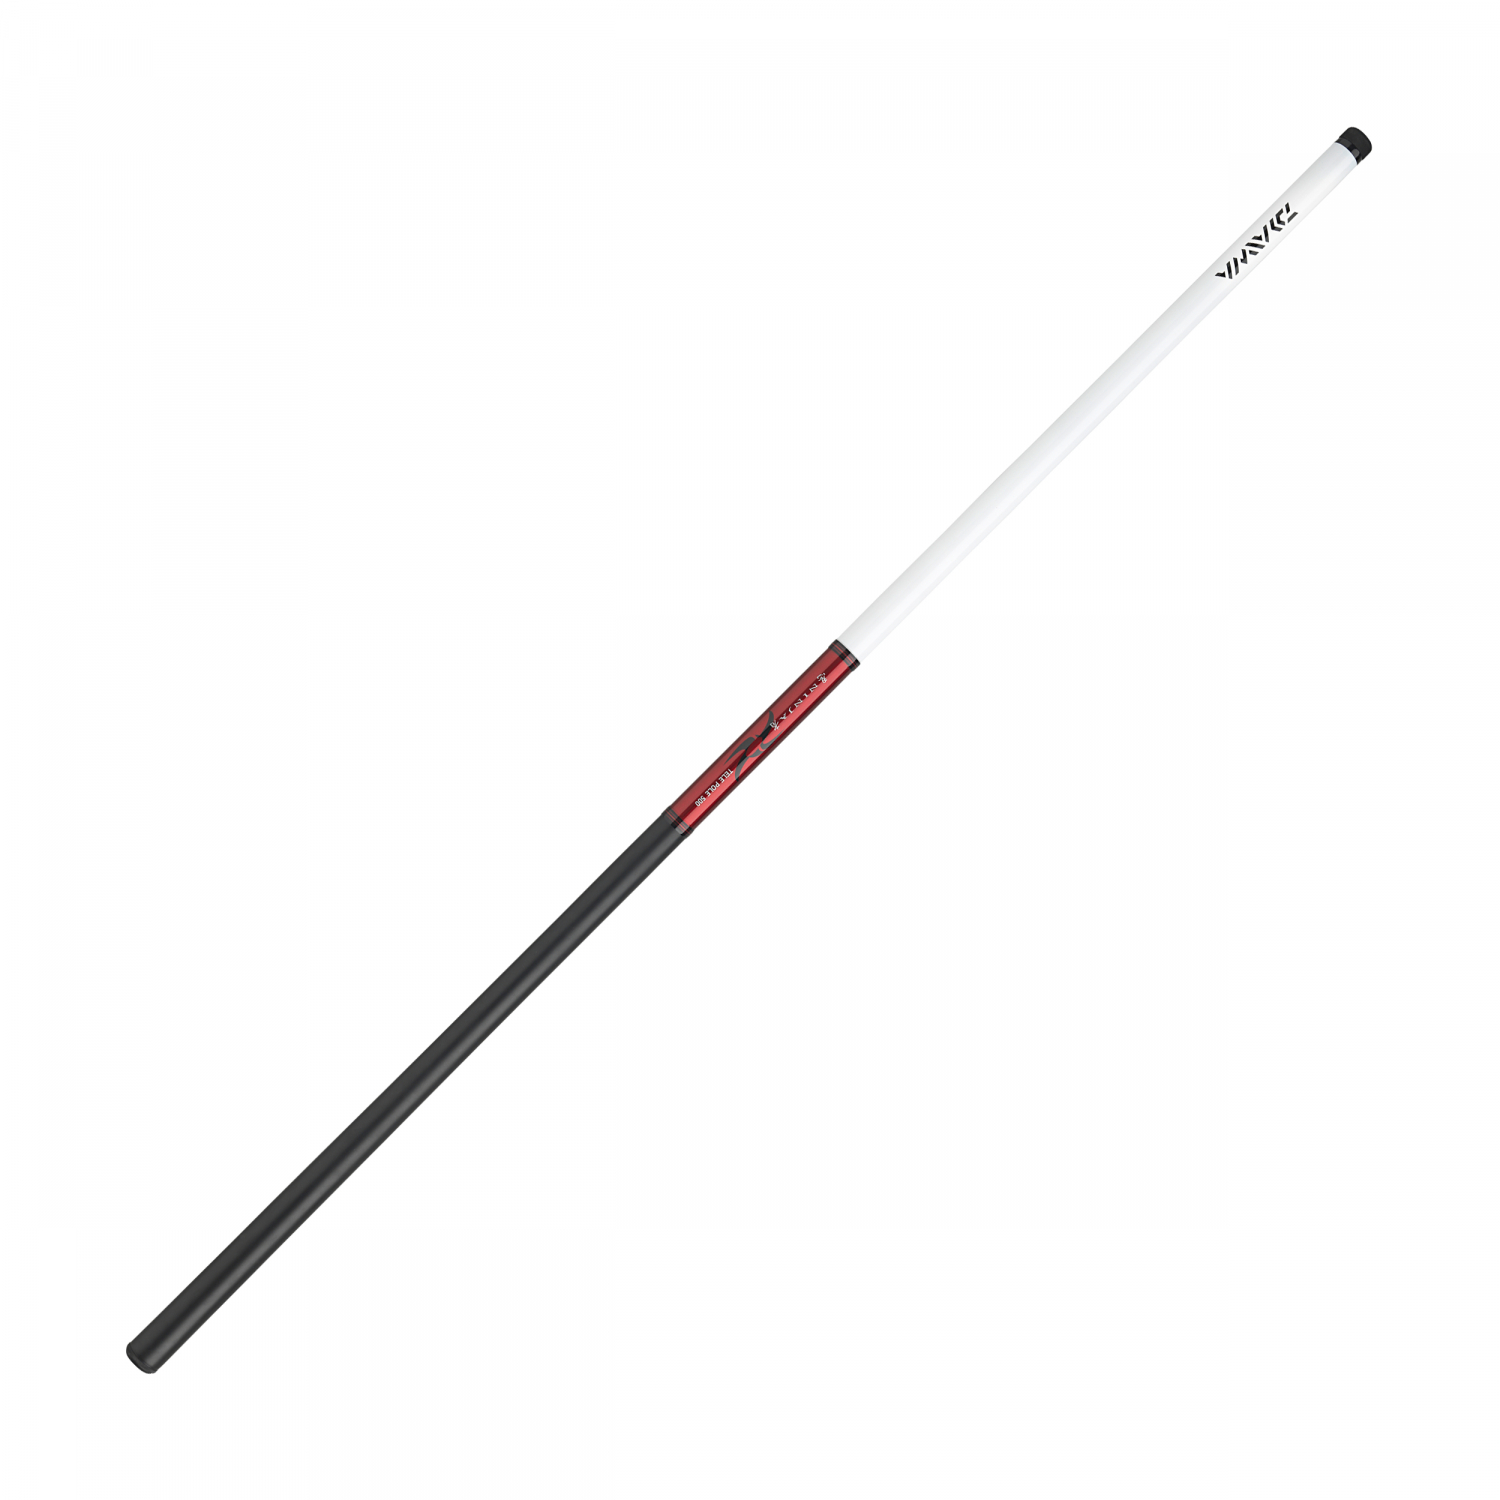 Daiwa Coarse Fishing Rod Ninja Tele Pole at low prices